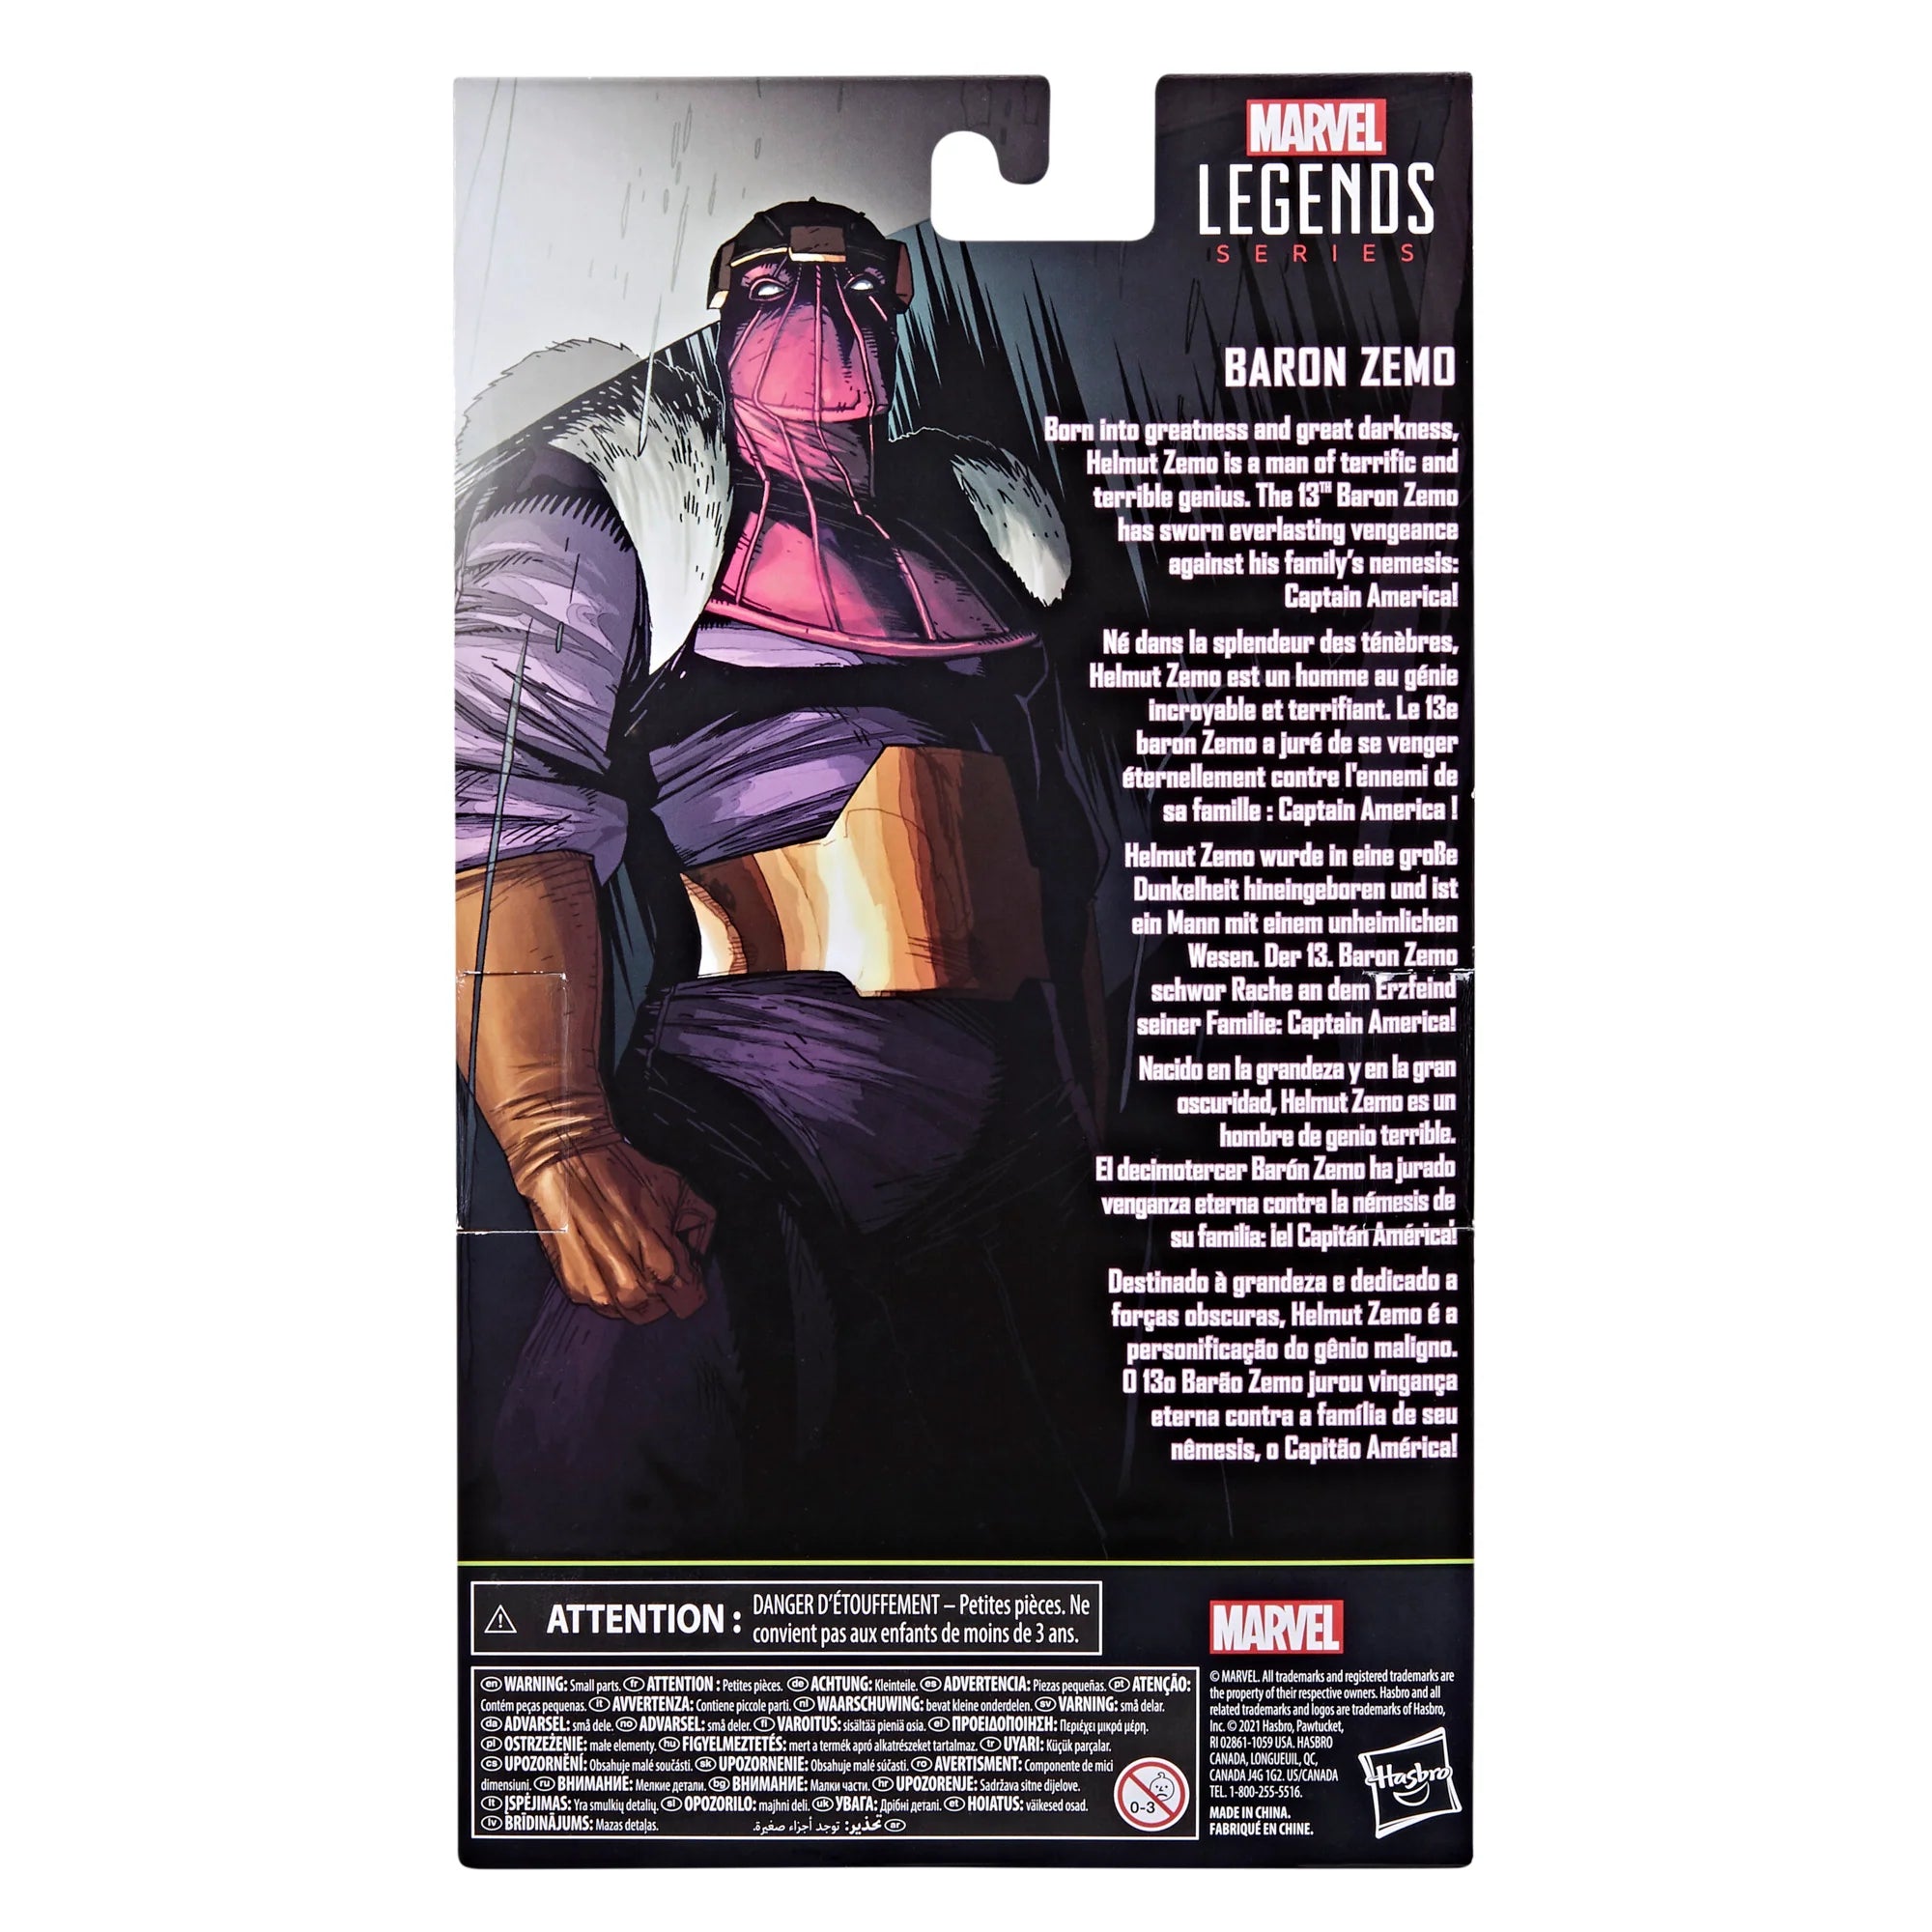 Marvel Legends: Super Villanos - Baron Zemo